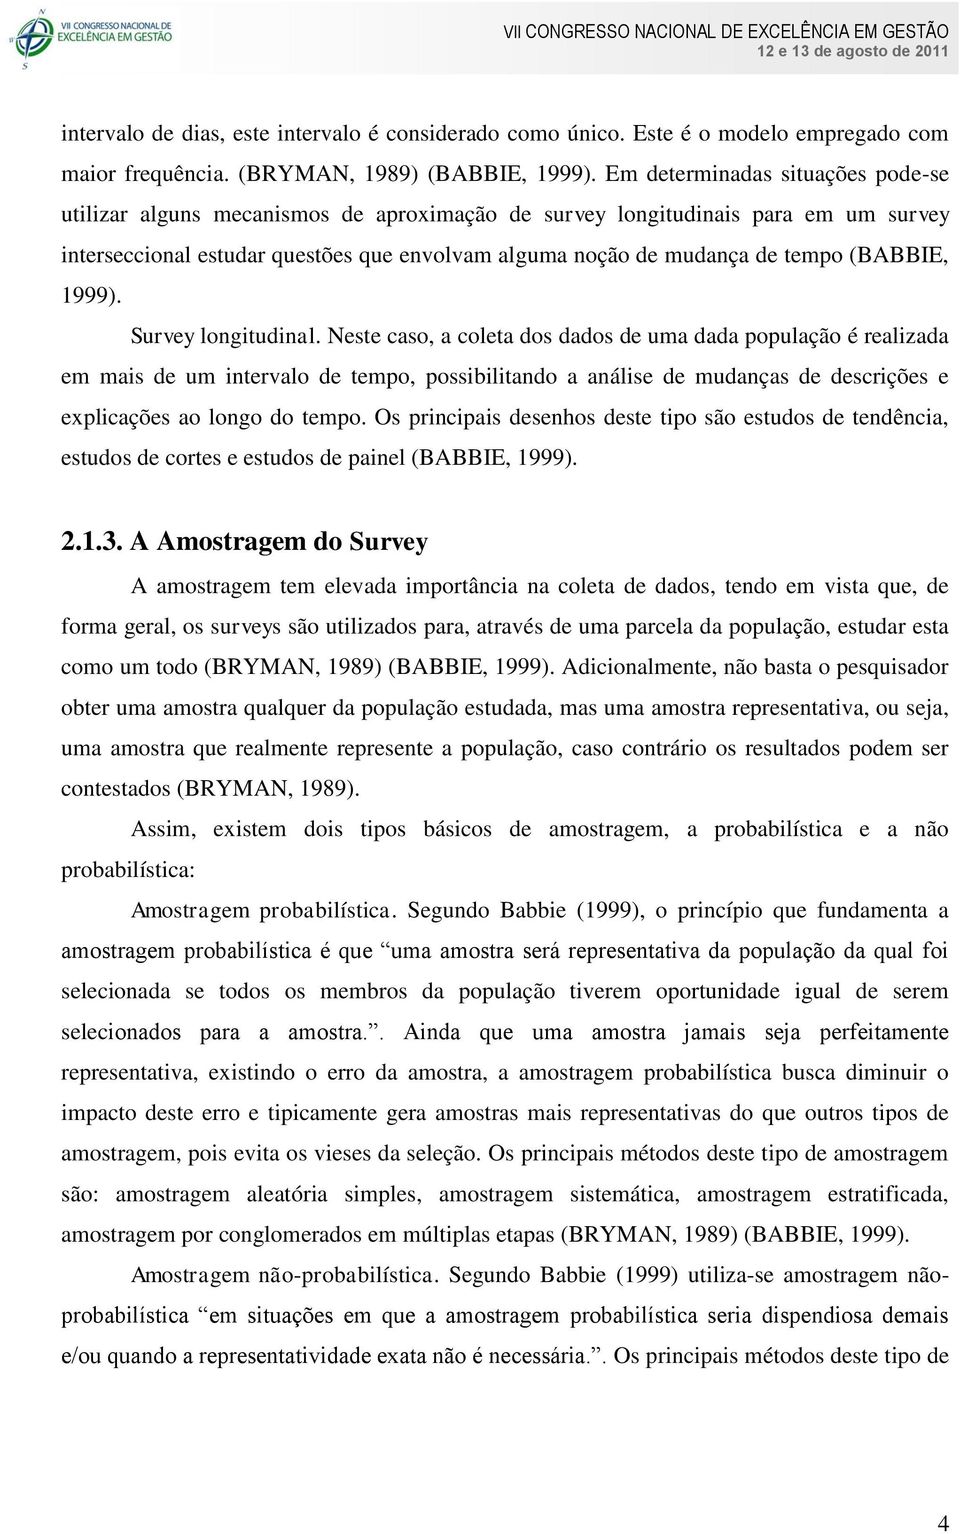 (BABBIE, 1999). Survey longitudinal.